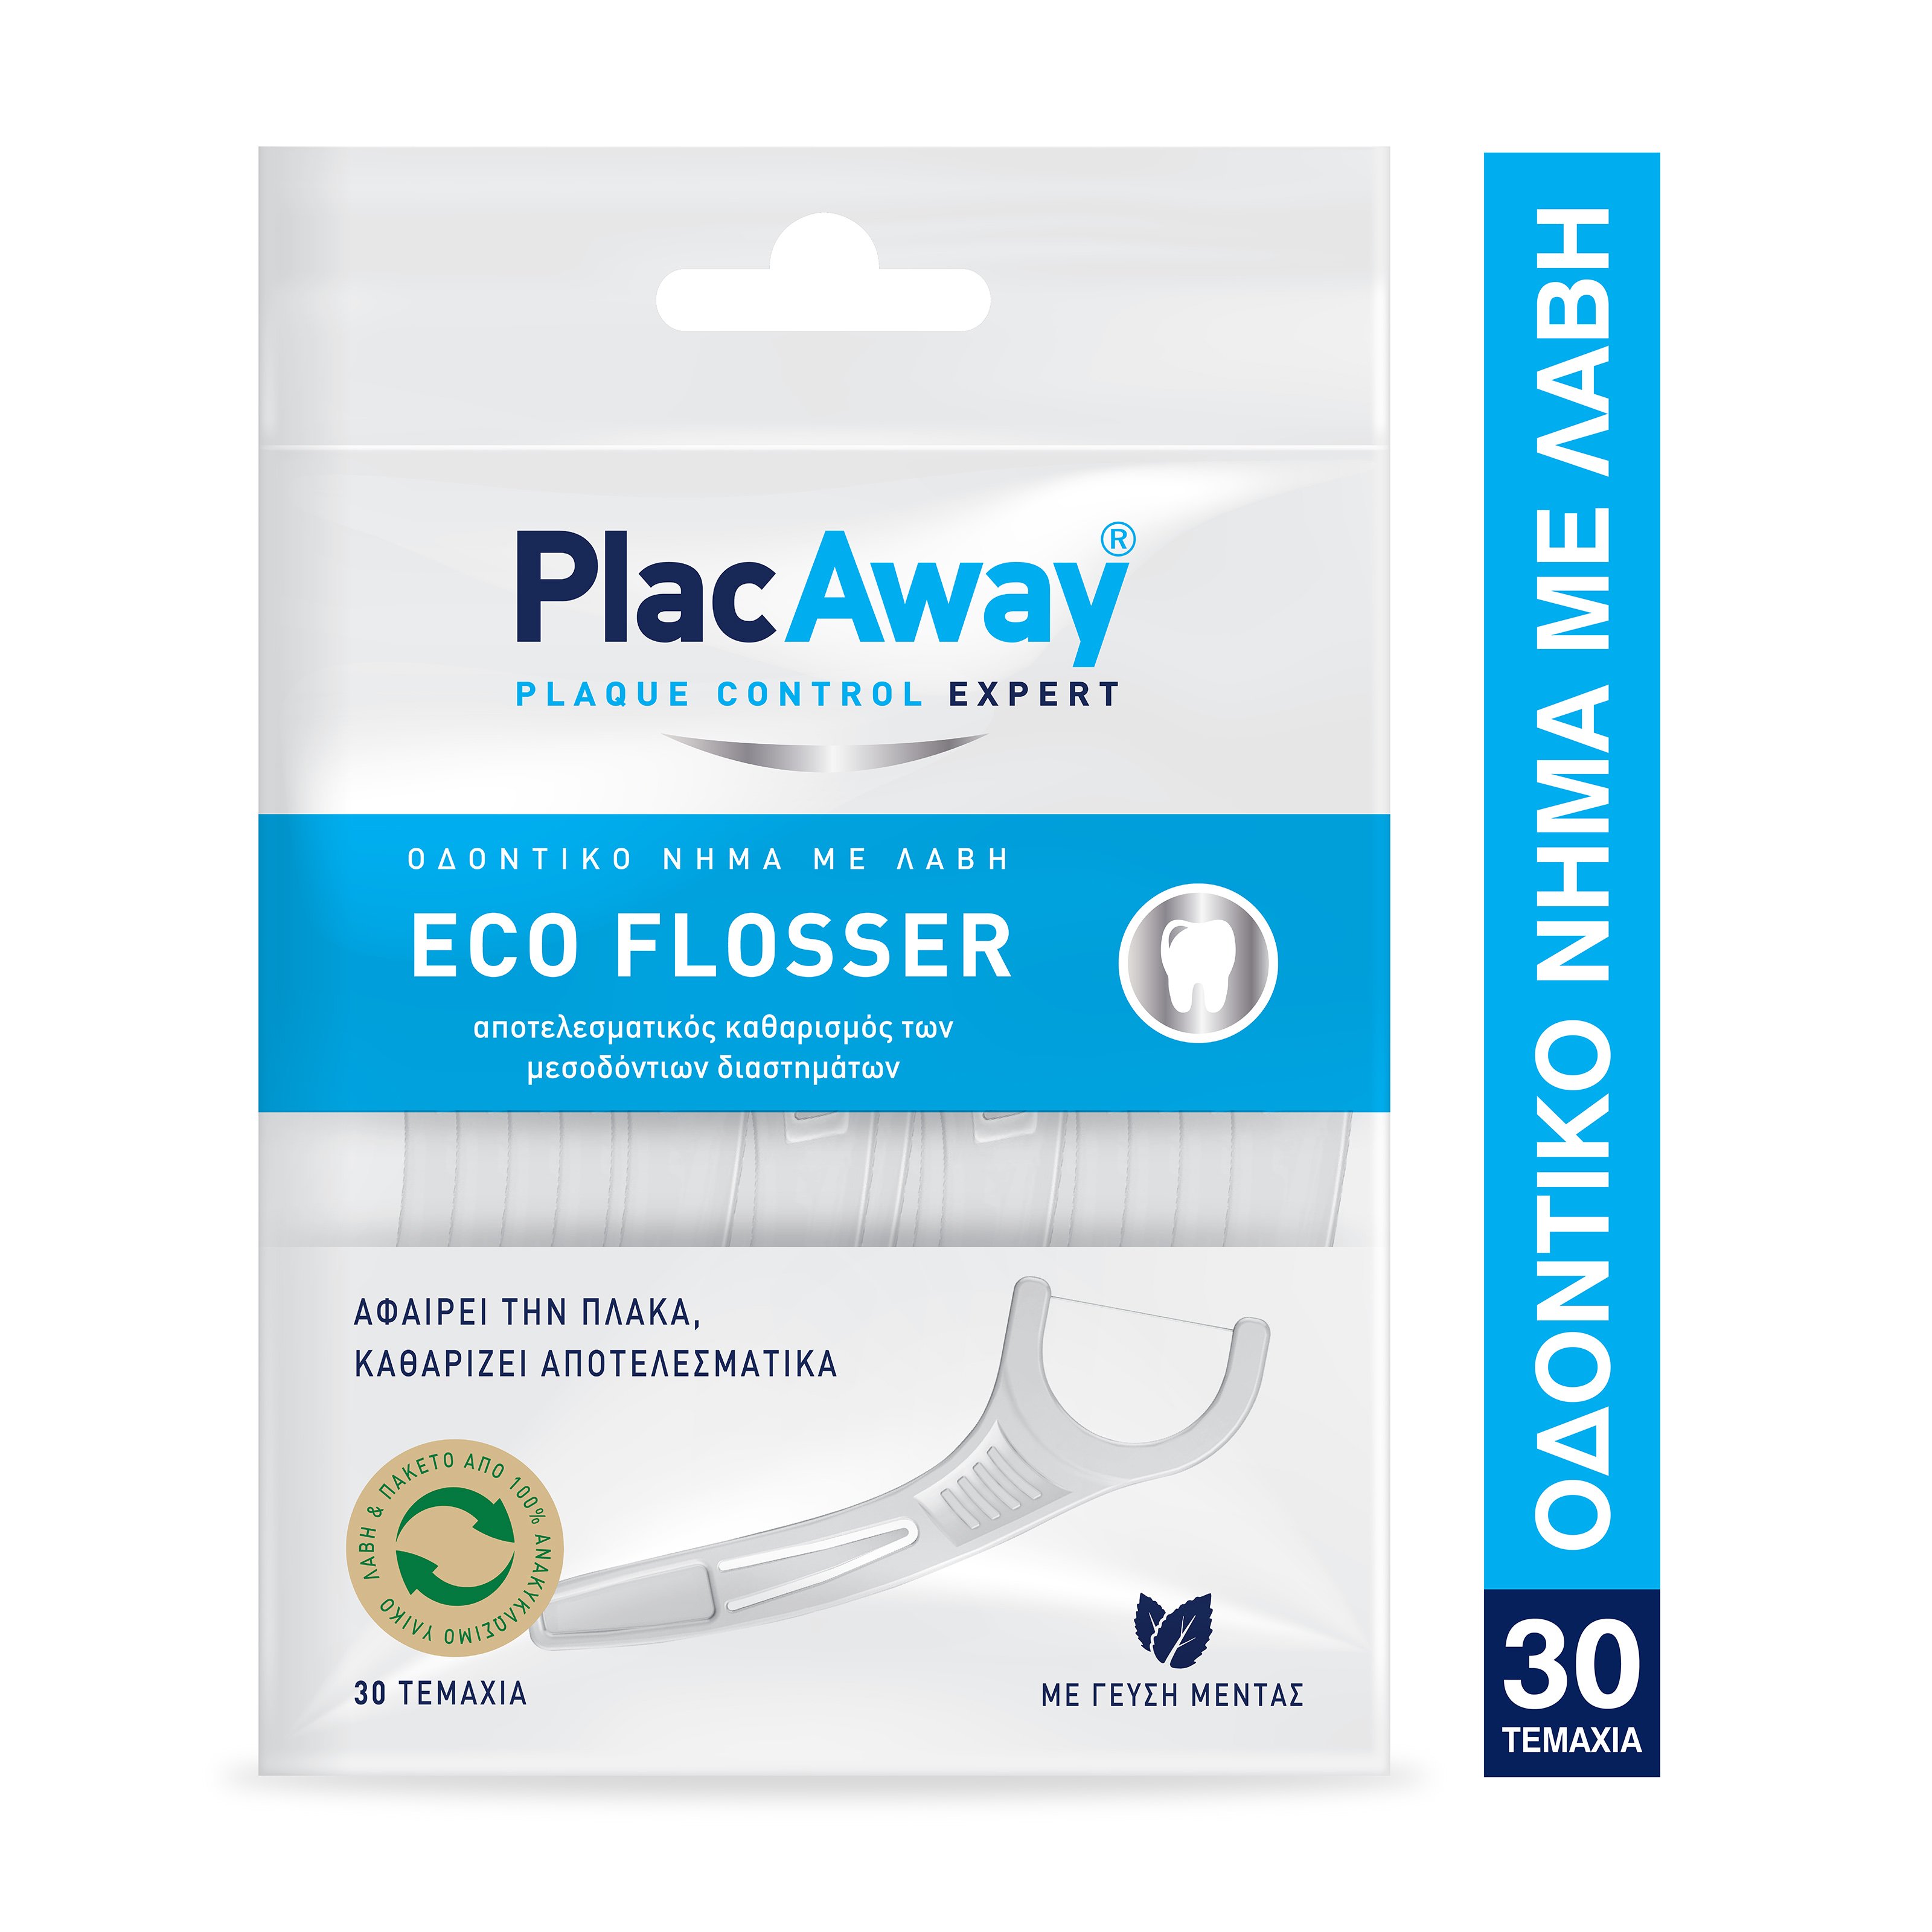 Plac Away Eco Flosser Οδοντικό Νήμα με Λαβή που Αφαιρεί την Πλάκα 30 Τεμάχια